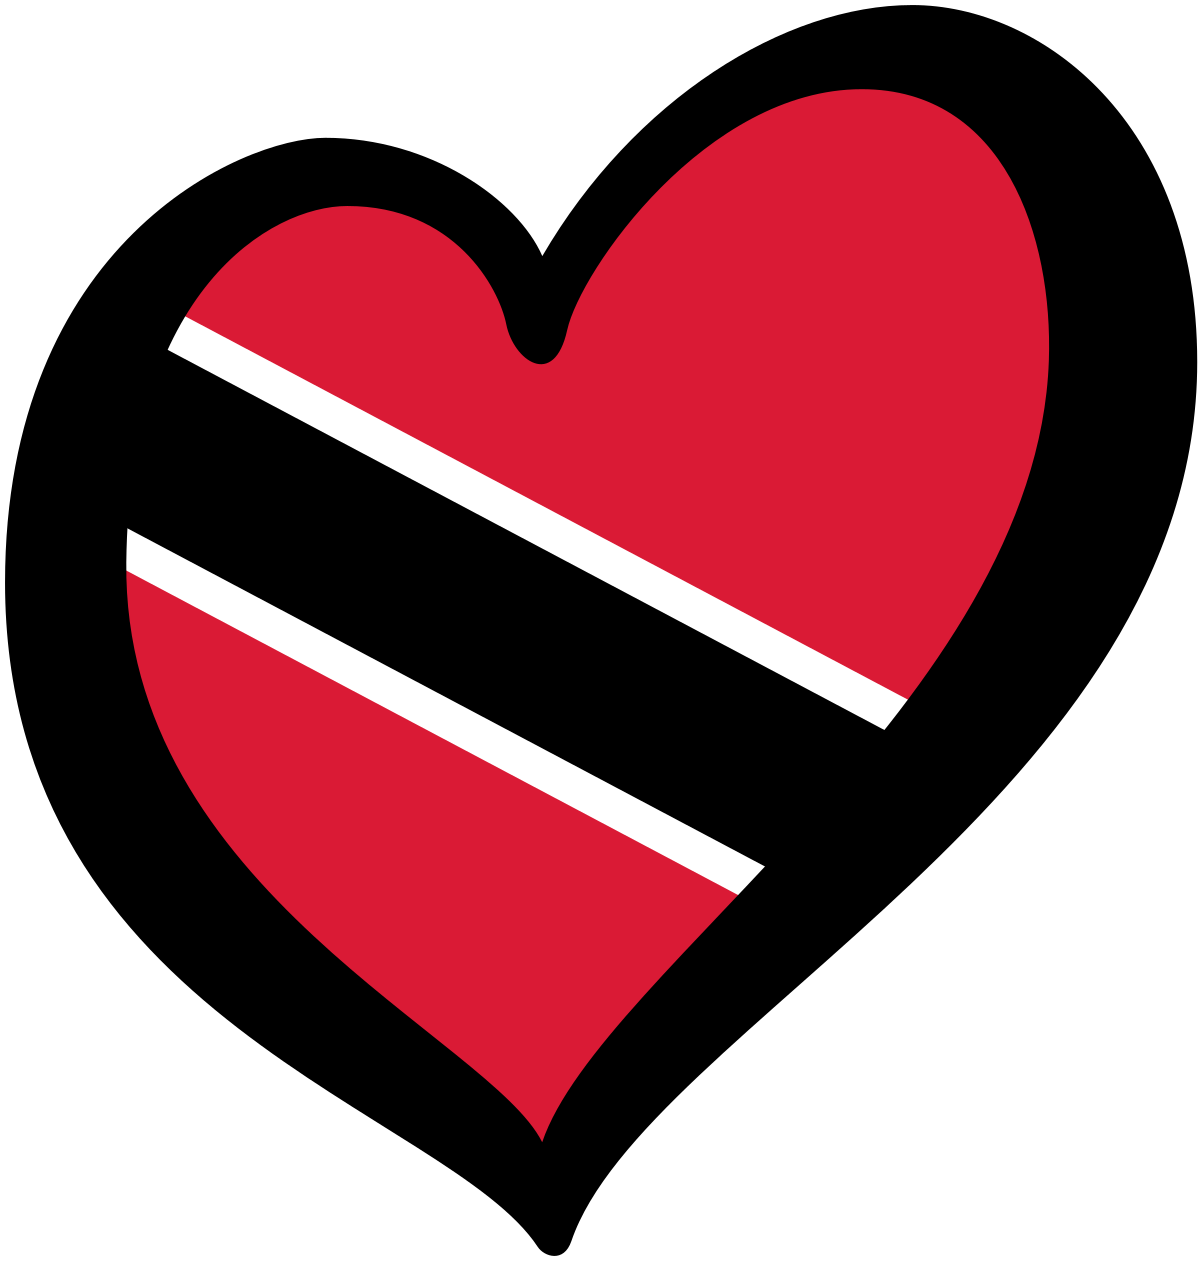 Trinidad And Tobago Flag PNG Pic